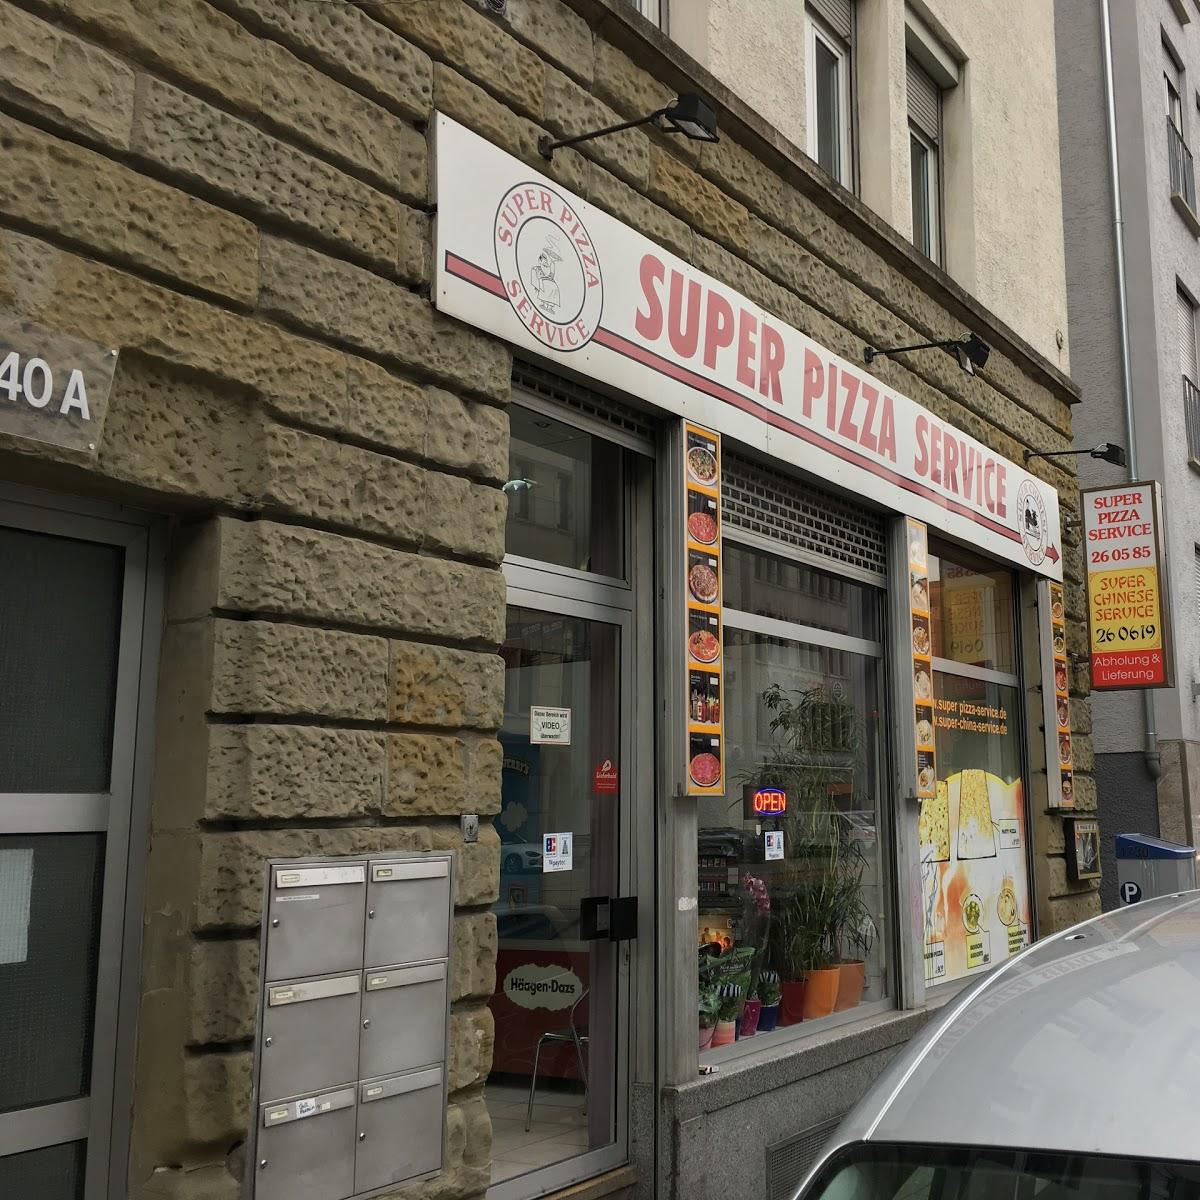 Restaurant "Super China & Pizza Service" in Stuttgart